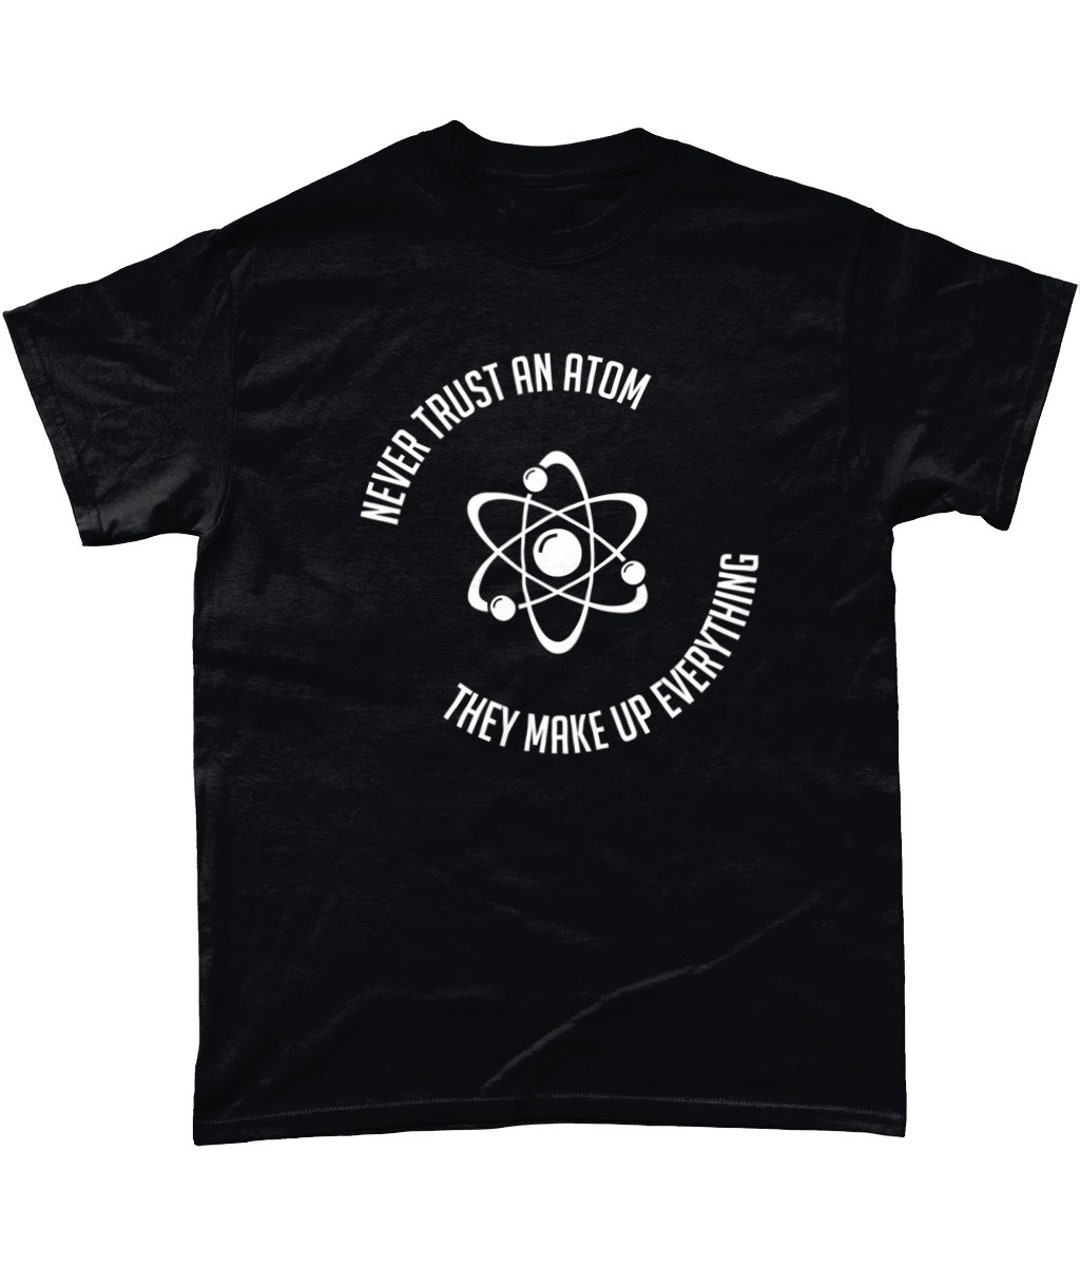 021 NEVER TRUST ATOM Funny Mens Funny Black T-shirts Novelty